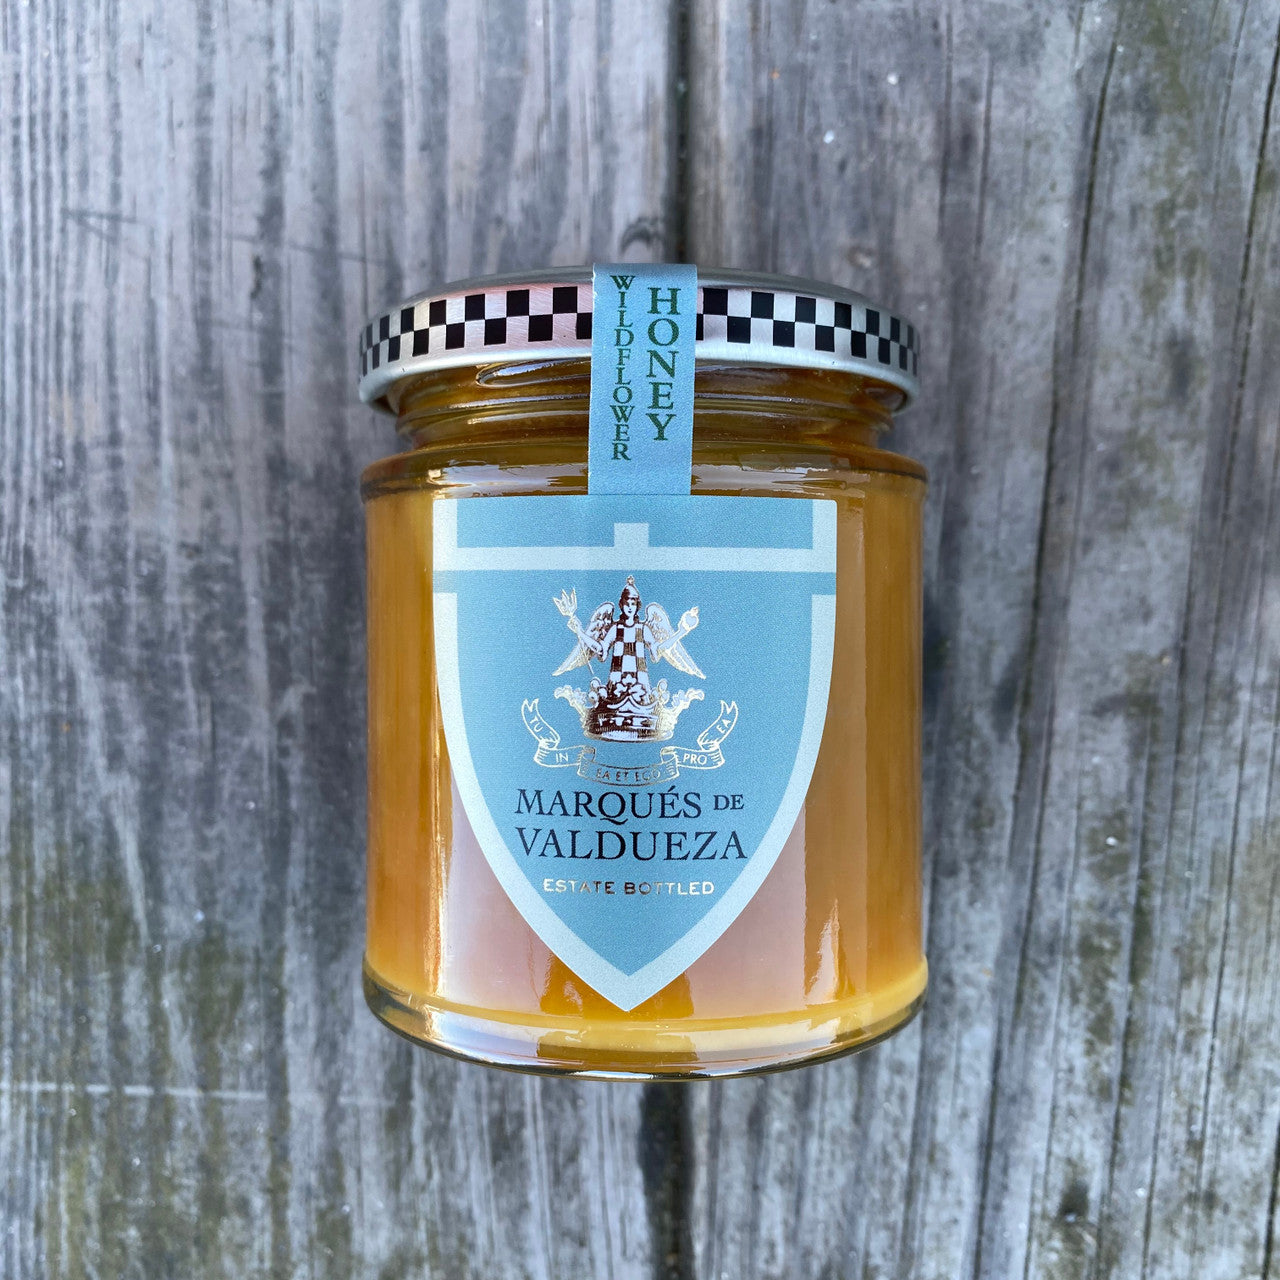 Marques de Valdueza Wildflower Honey